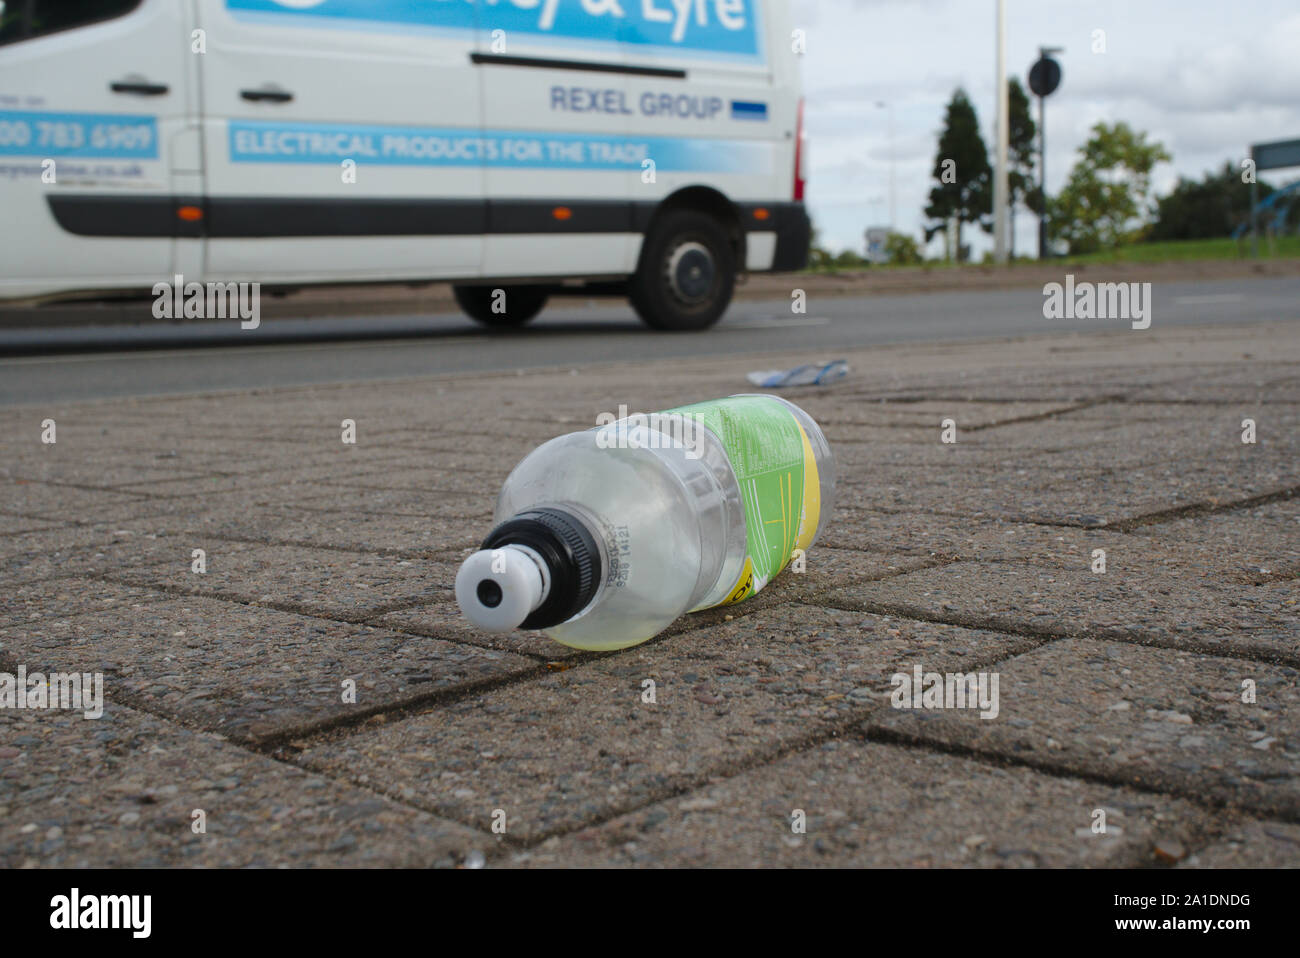 Discarded plastic bottle on pavement. Birmingham. British Isles Stock Photo